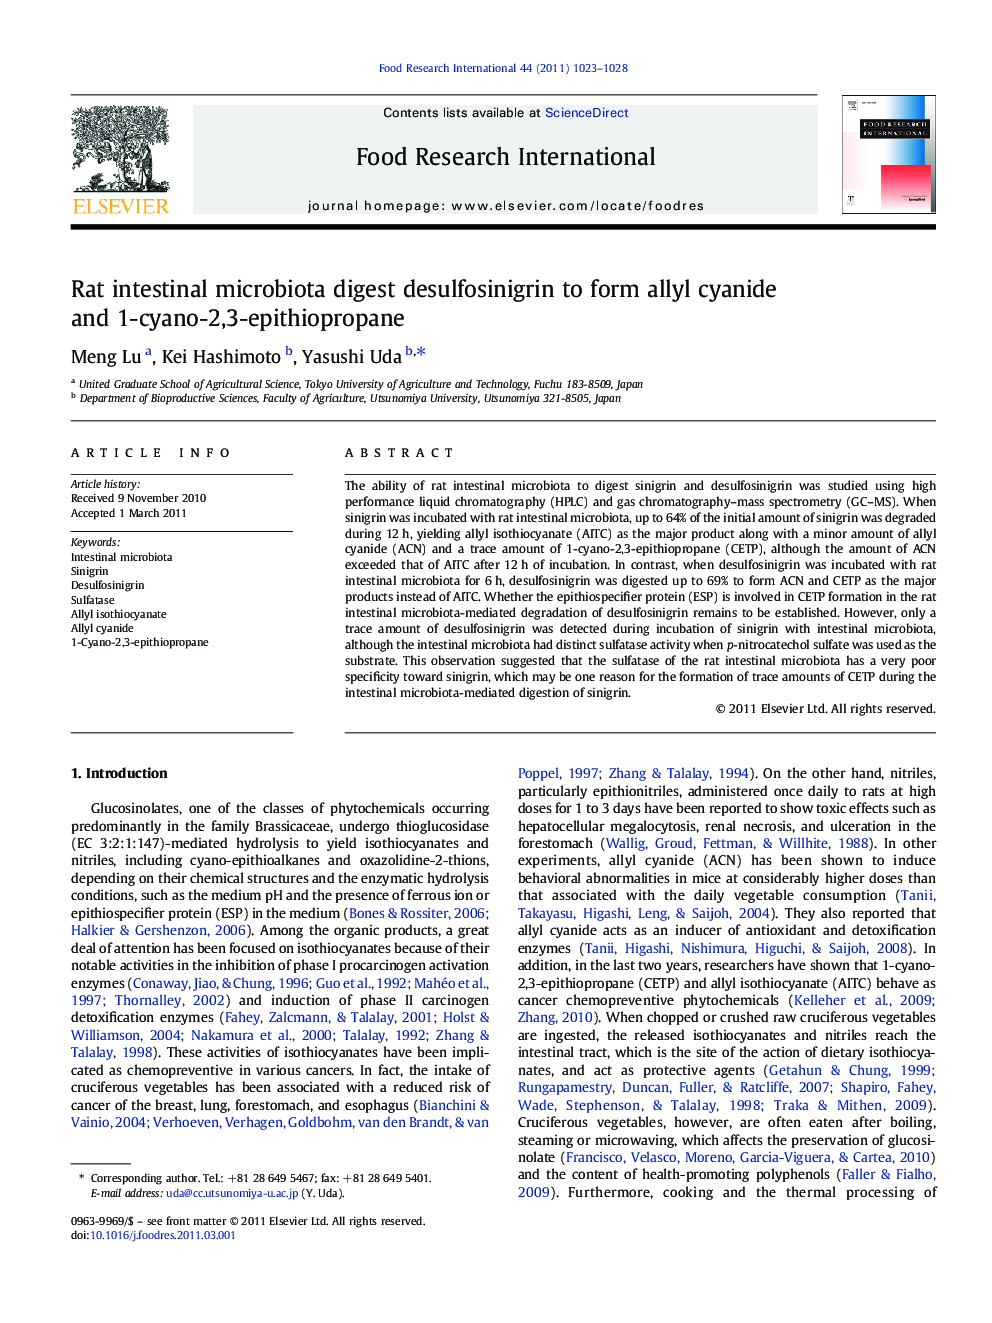 Rat intestinal microbiota digest desulfosinigrin to form allyl cyanide and 1-cyano-2,3-epithiopropane